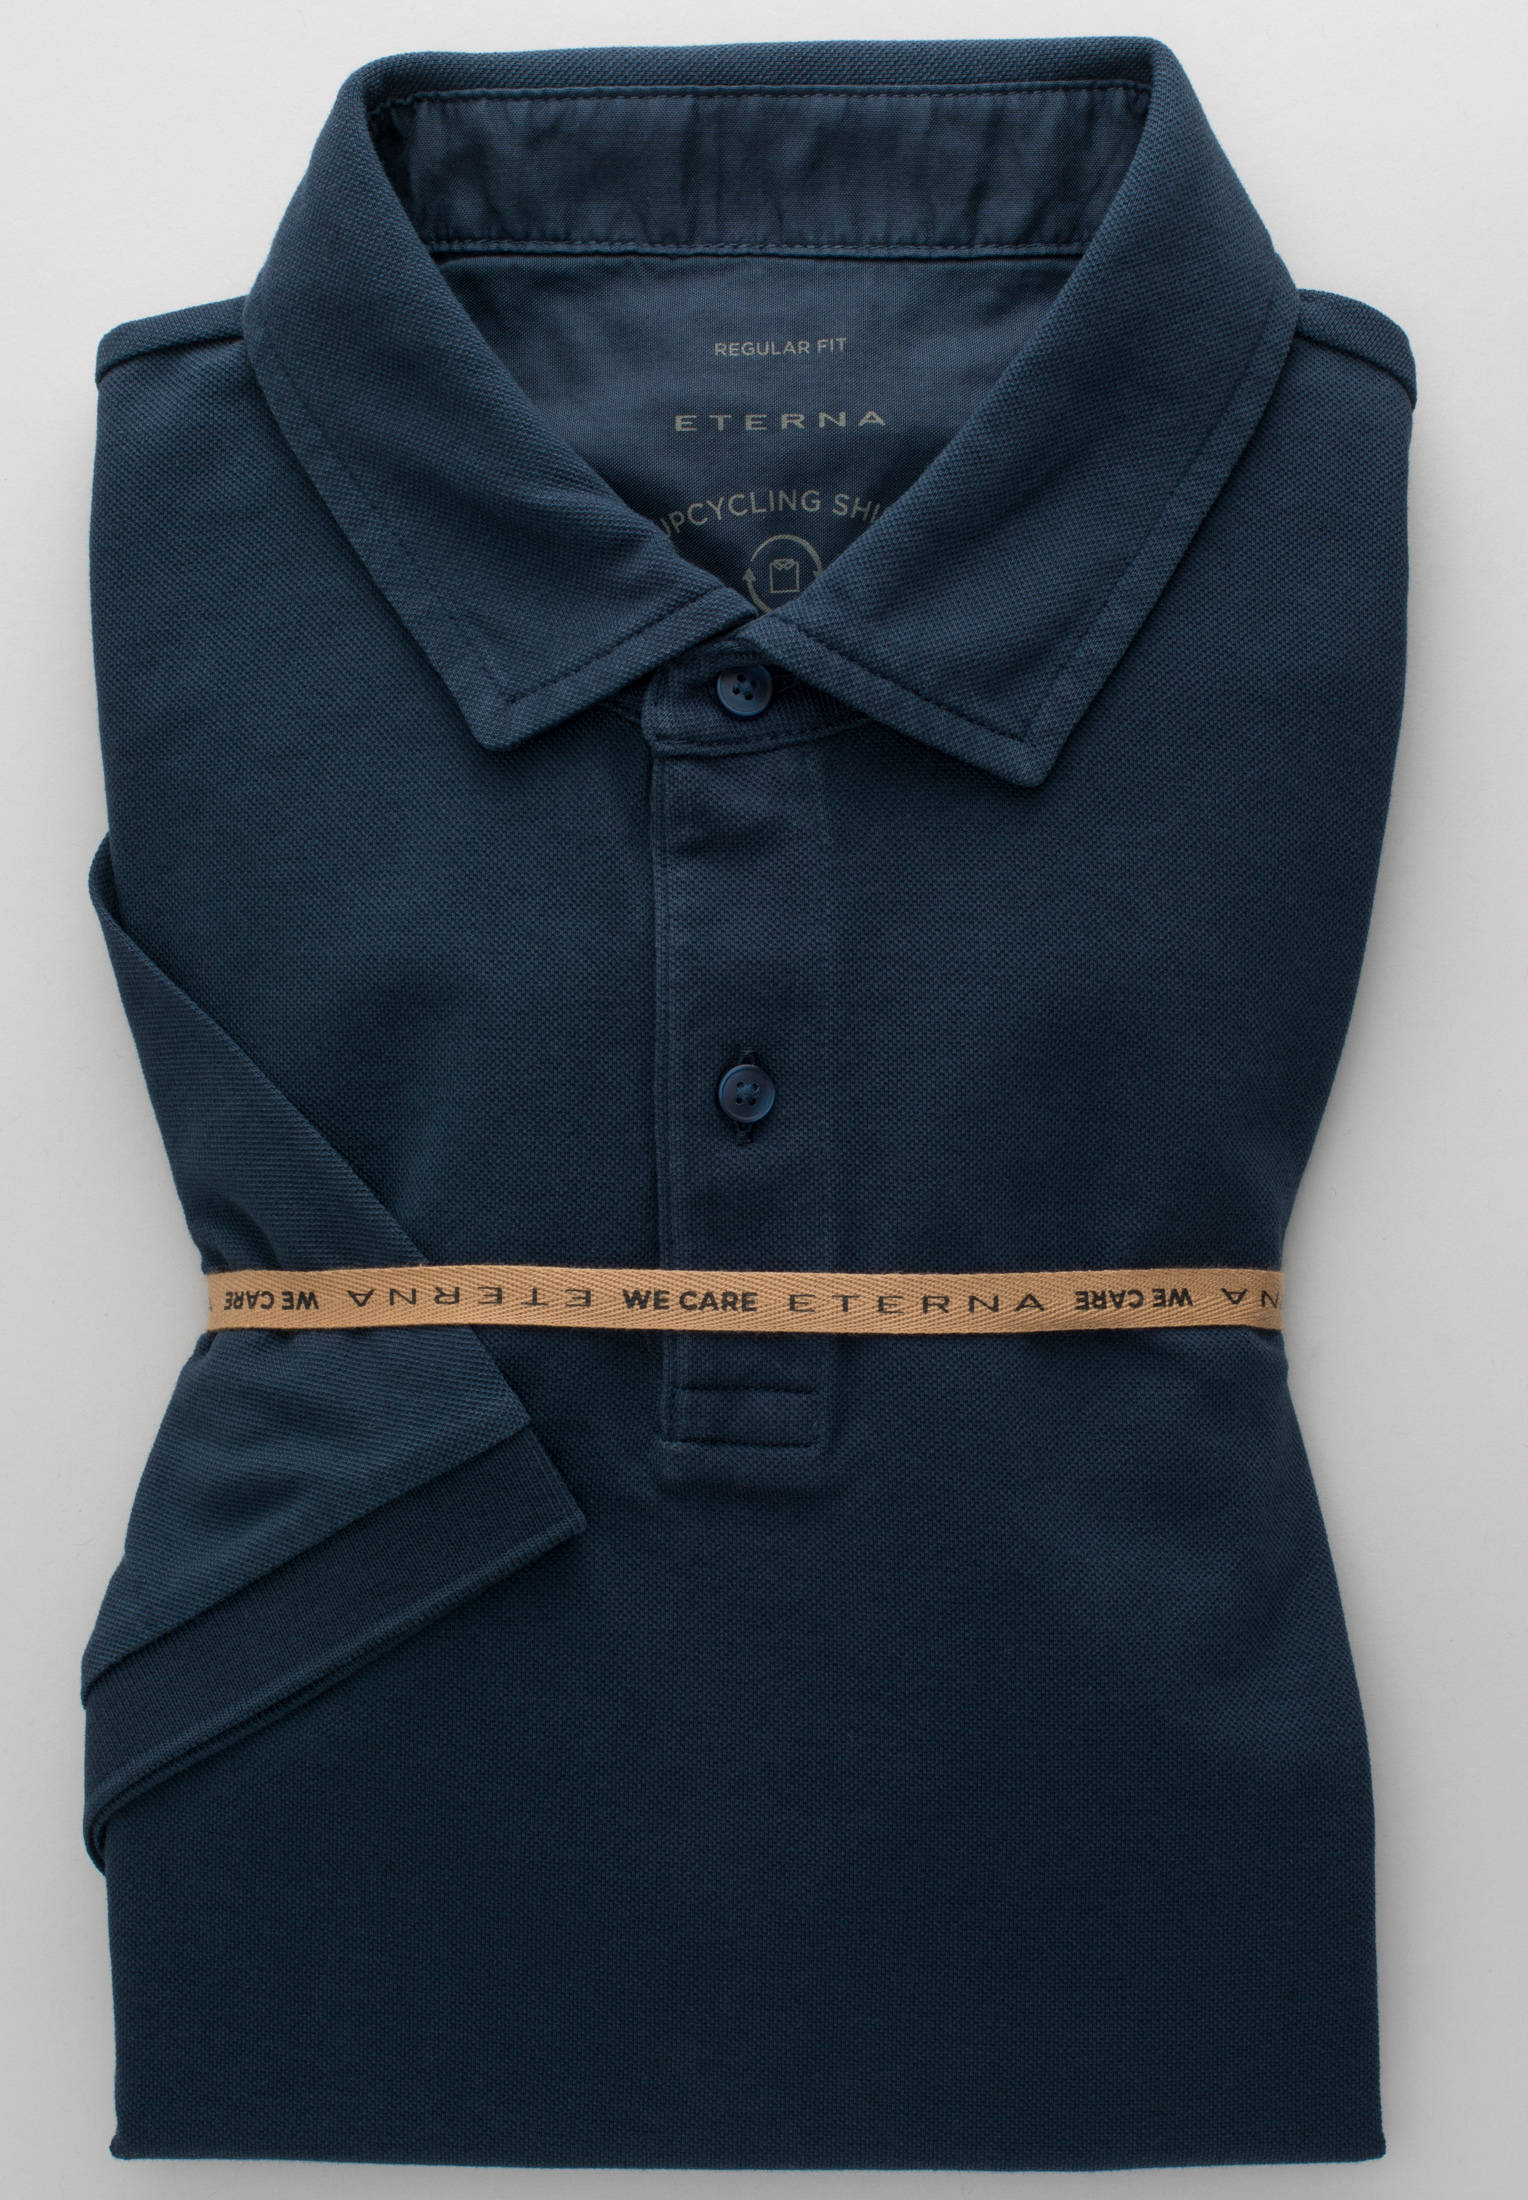 MODERN FIT Poloshirt in dunkelblau unifarben | dunkelblau | M | Kurzarm |  1SP00087-01-81-M-1/2